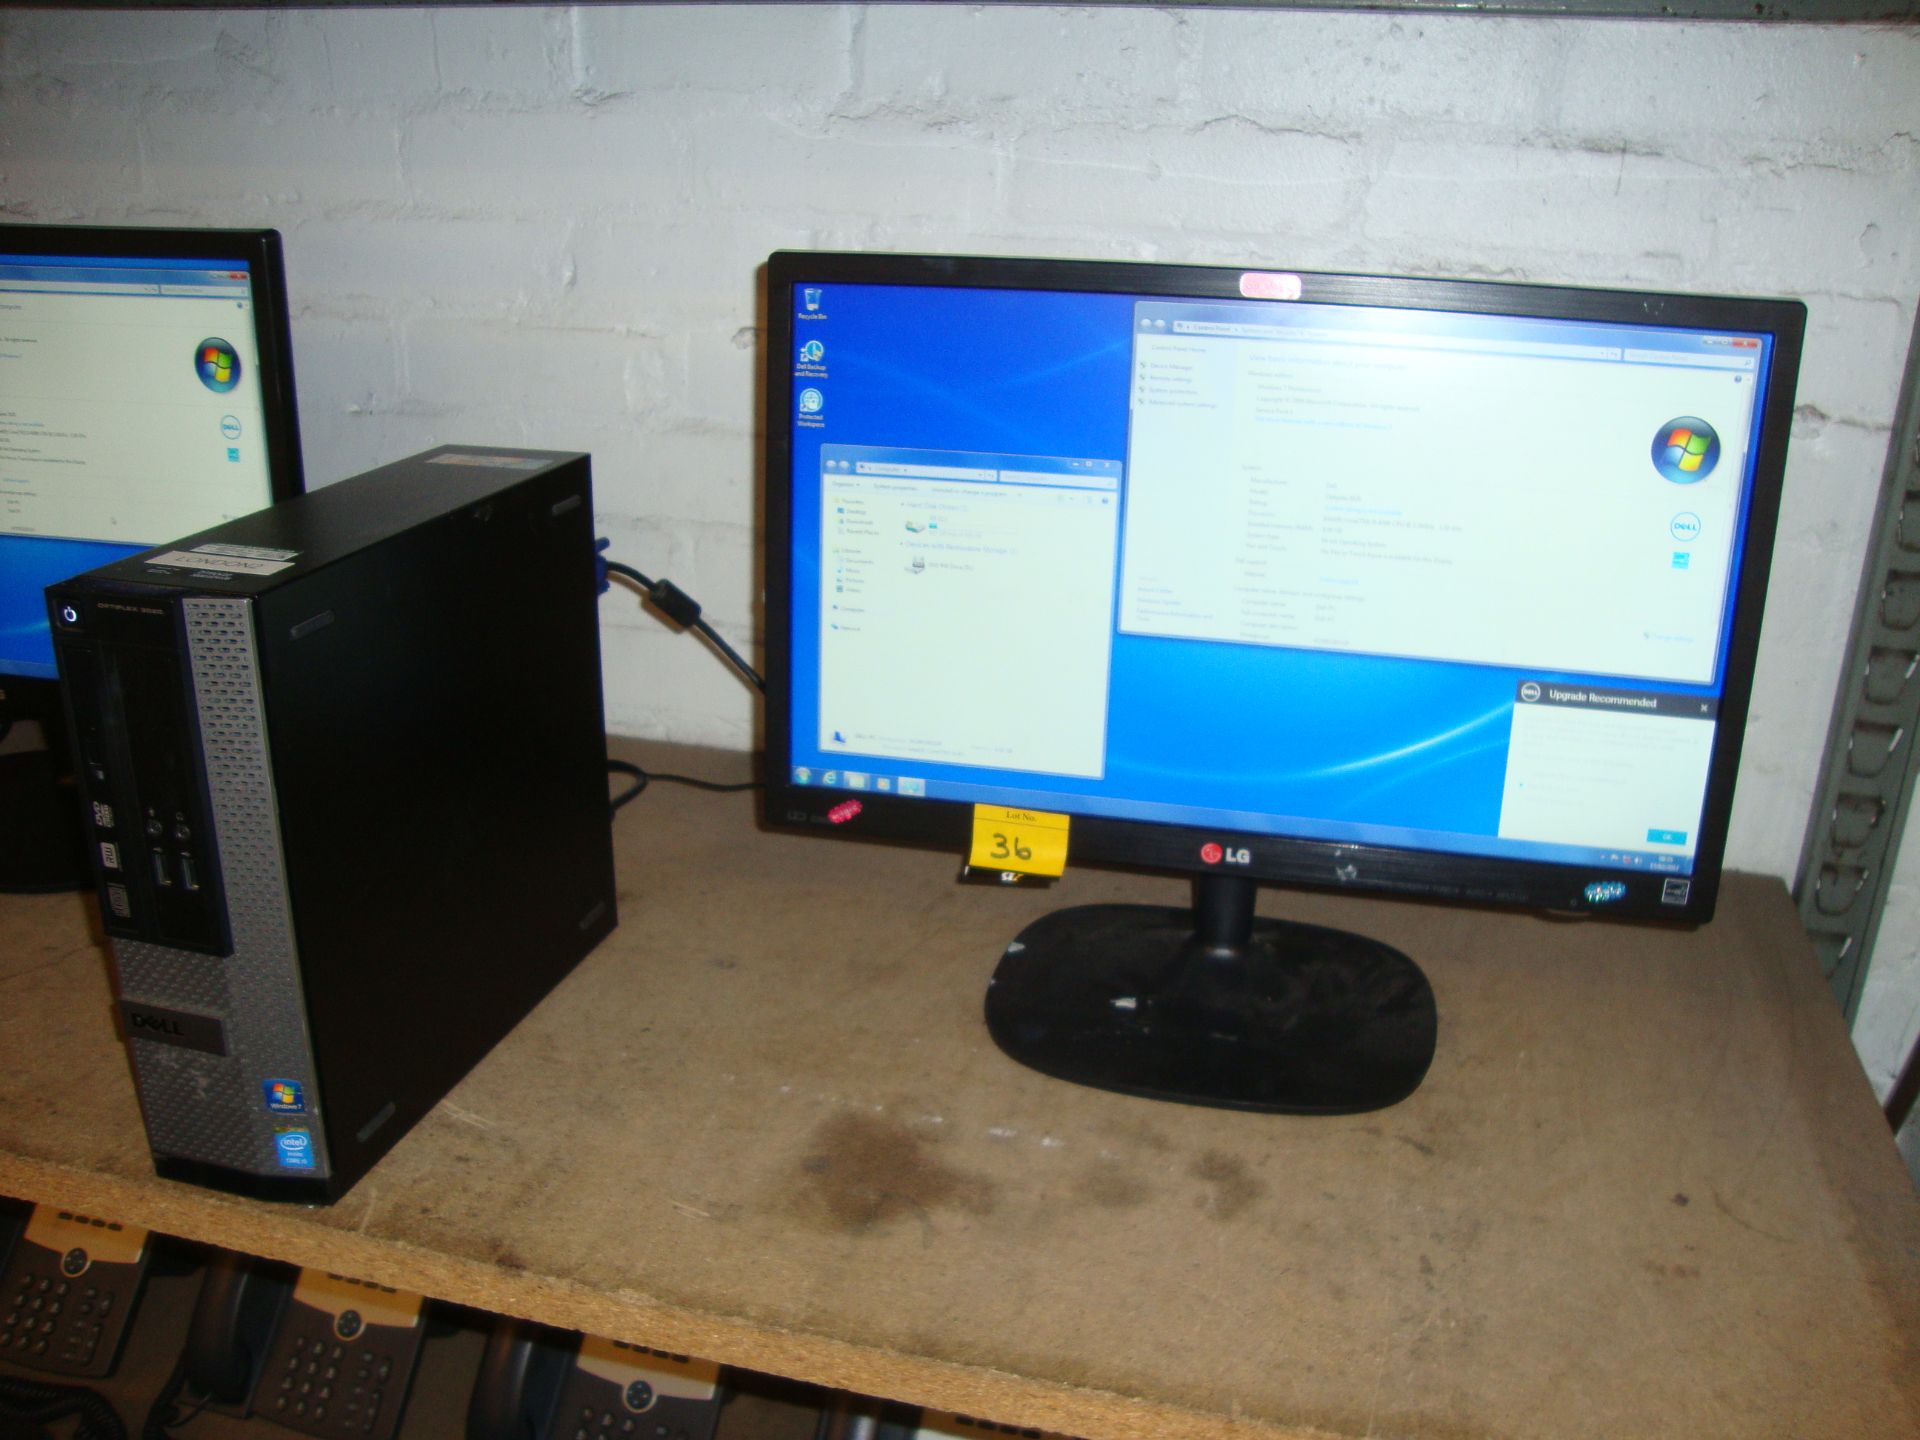 Dell Optiplex 3020 computer with Core i5-4590 processor, 8Gb RAM, 500Gb hard drive + LG 22" Monitor - Image 4 of 7